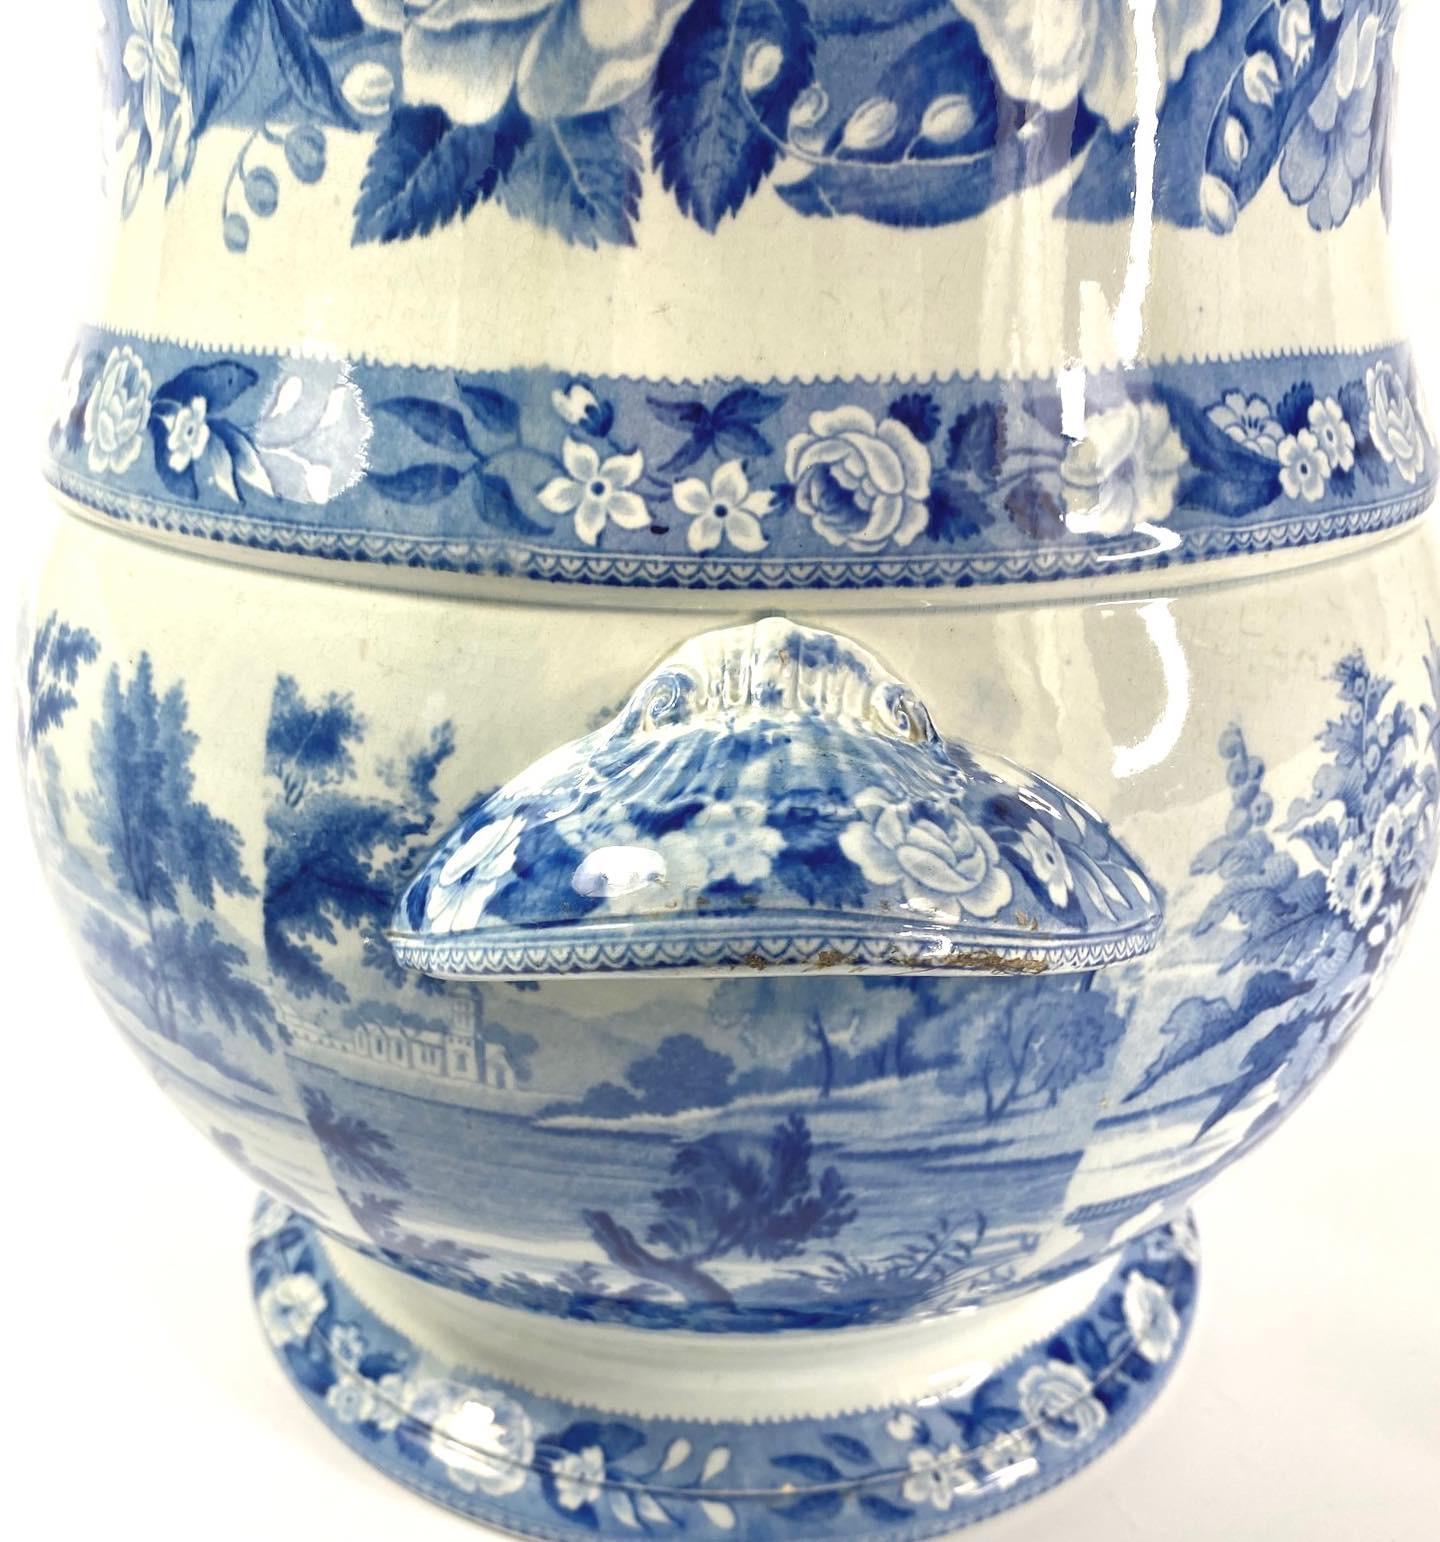 English Staffordshire blue and white printed pail, c. 1830.